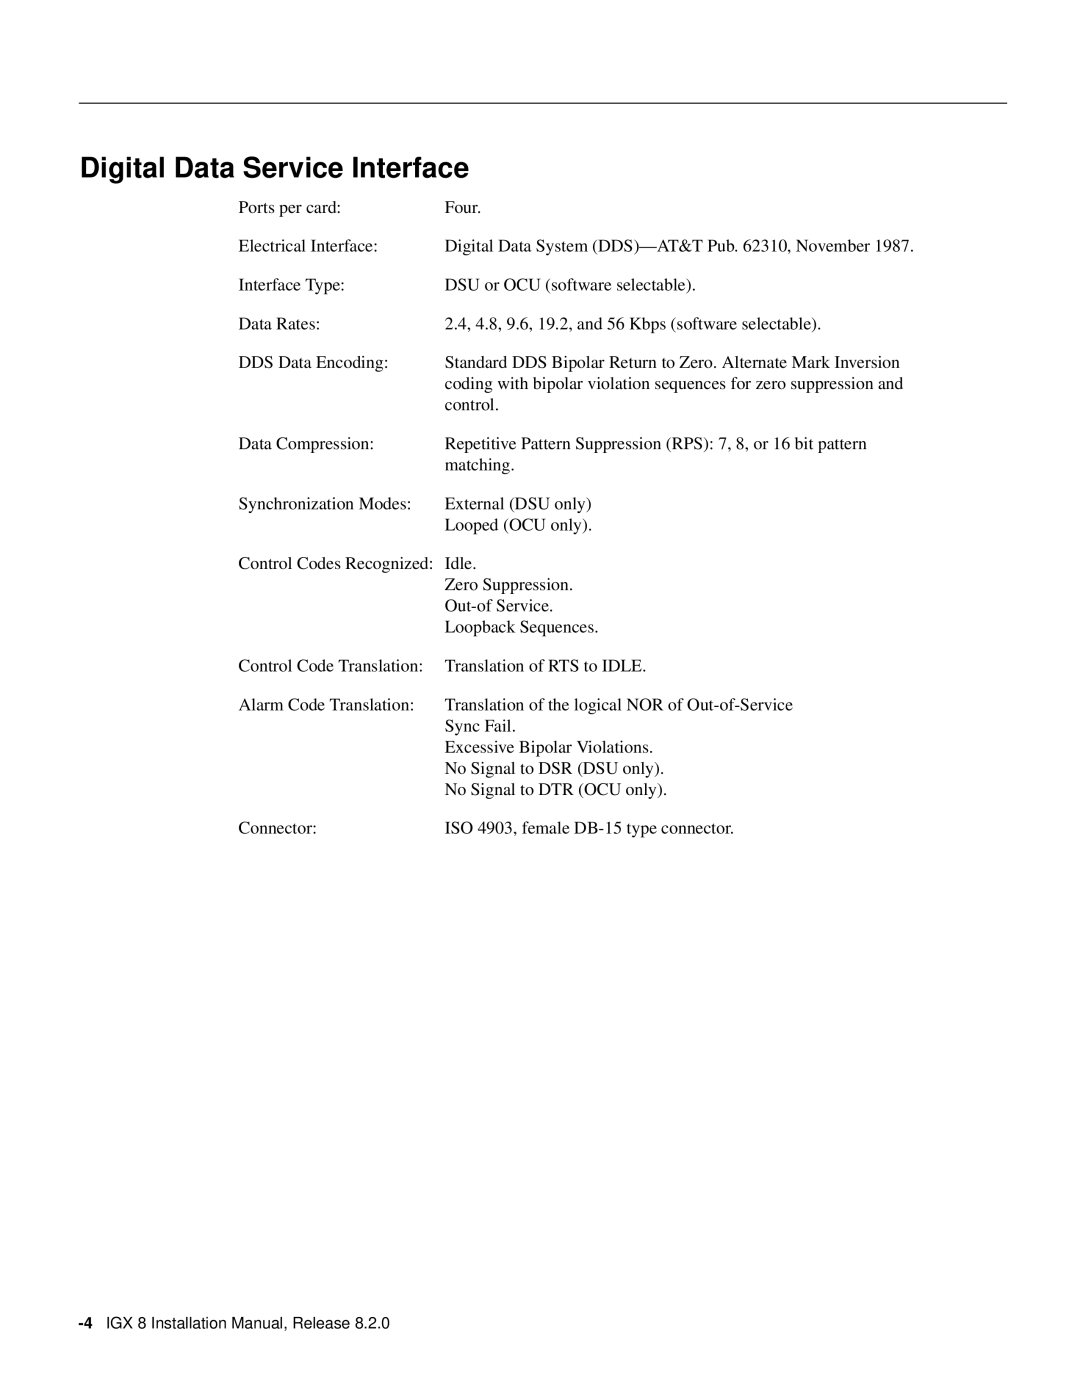 Cisco Systems appendix Digital Data Service Interface, IGX 8 Installation Manual, Release 